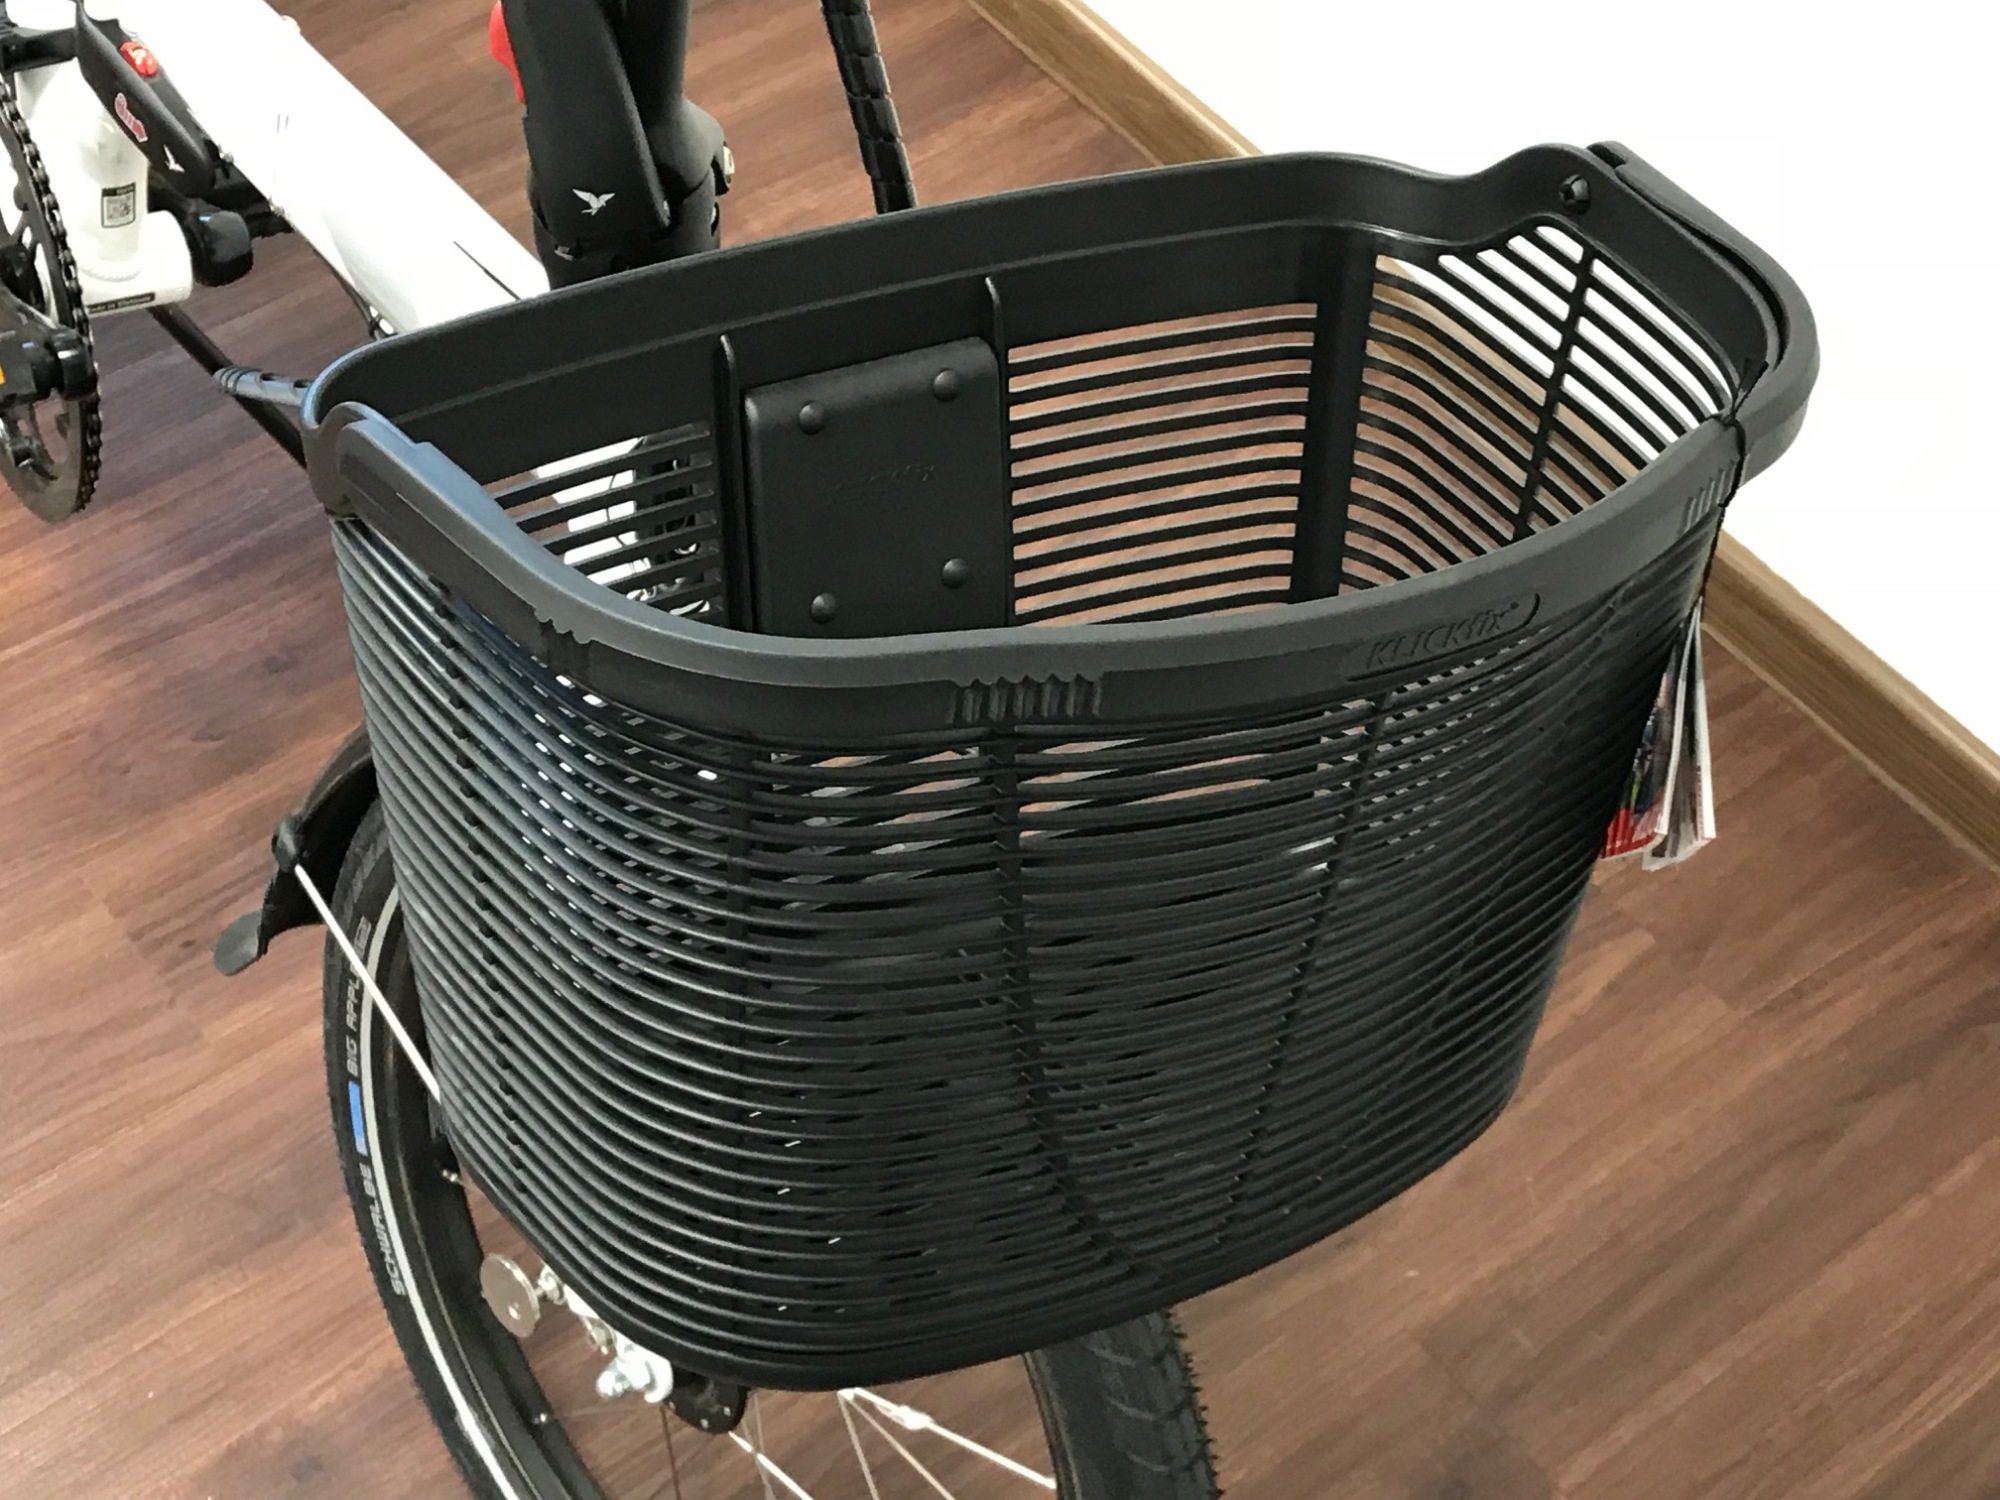 KLICKfix Hold On Basket Einkaufskorb vorne Kunststoff Groß 18 Liter